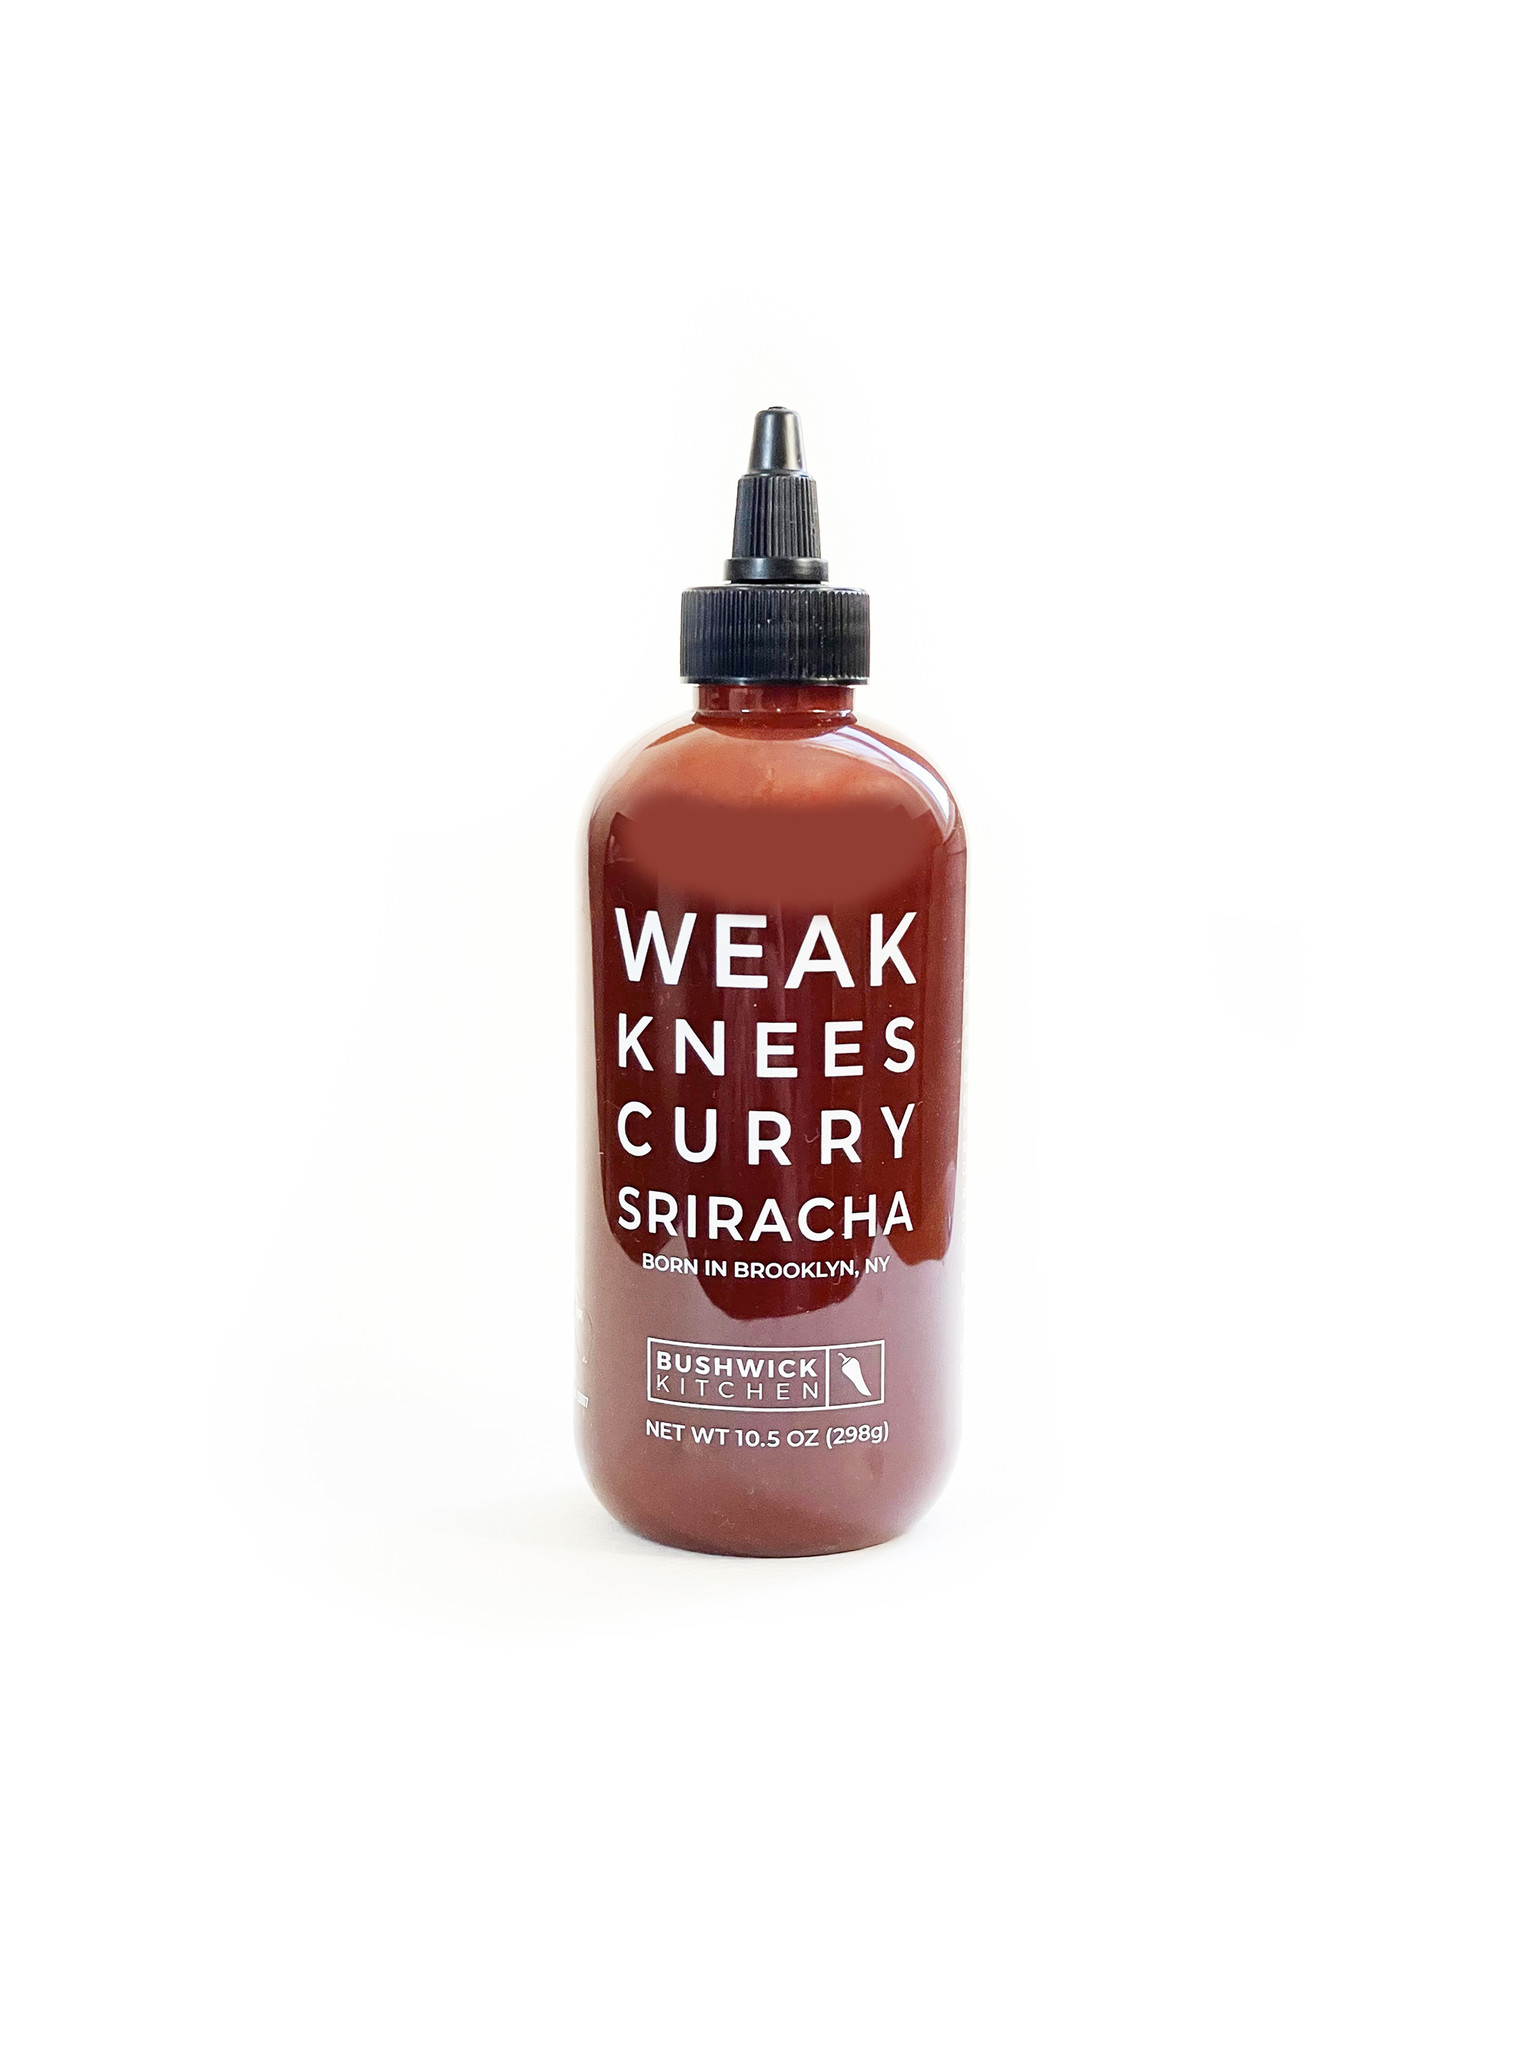 Bushwick Kitchen Weak Knees Curry Sriracha-1